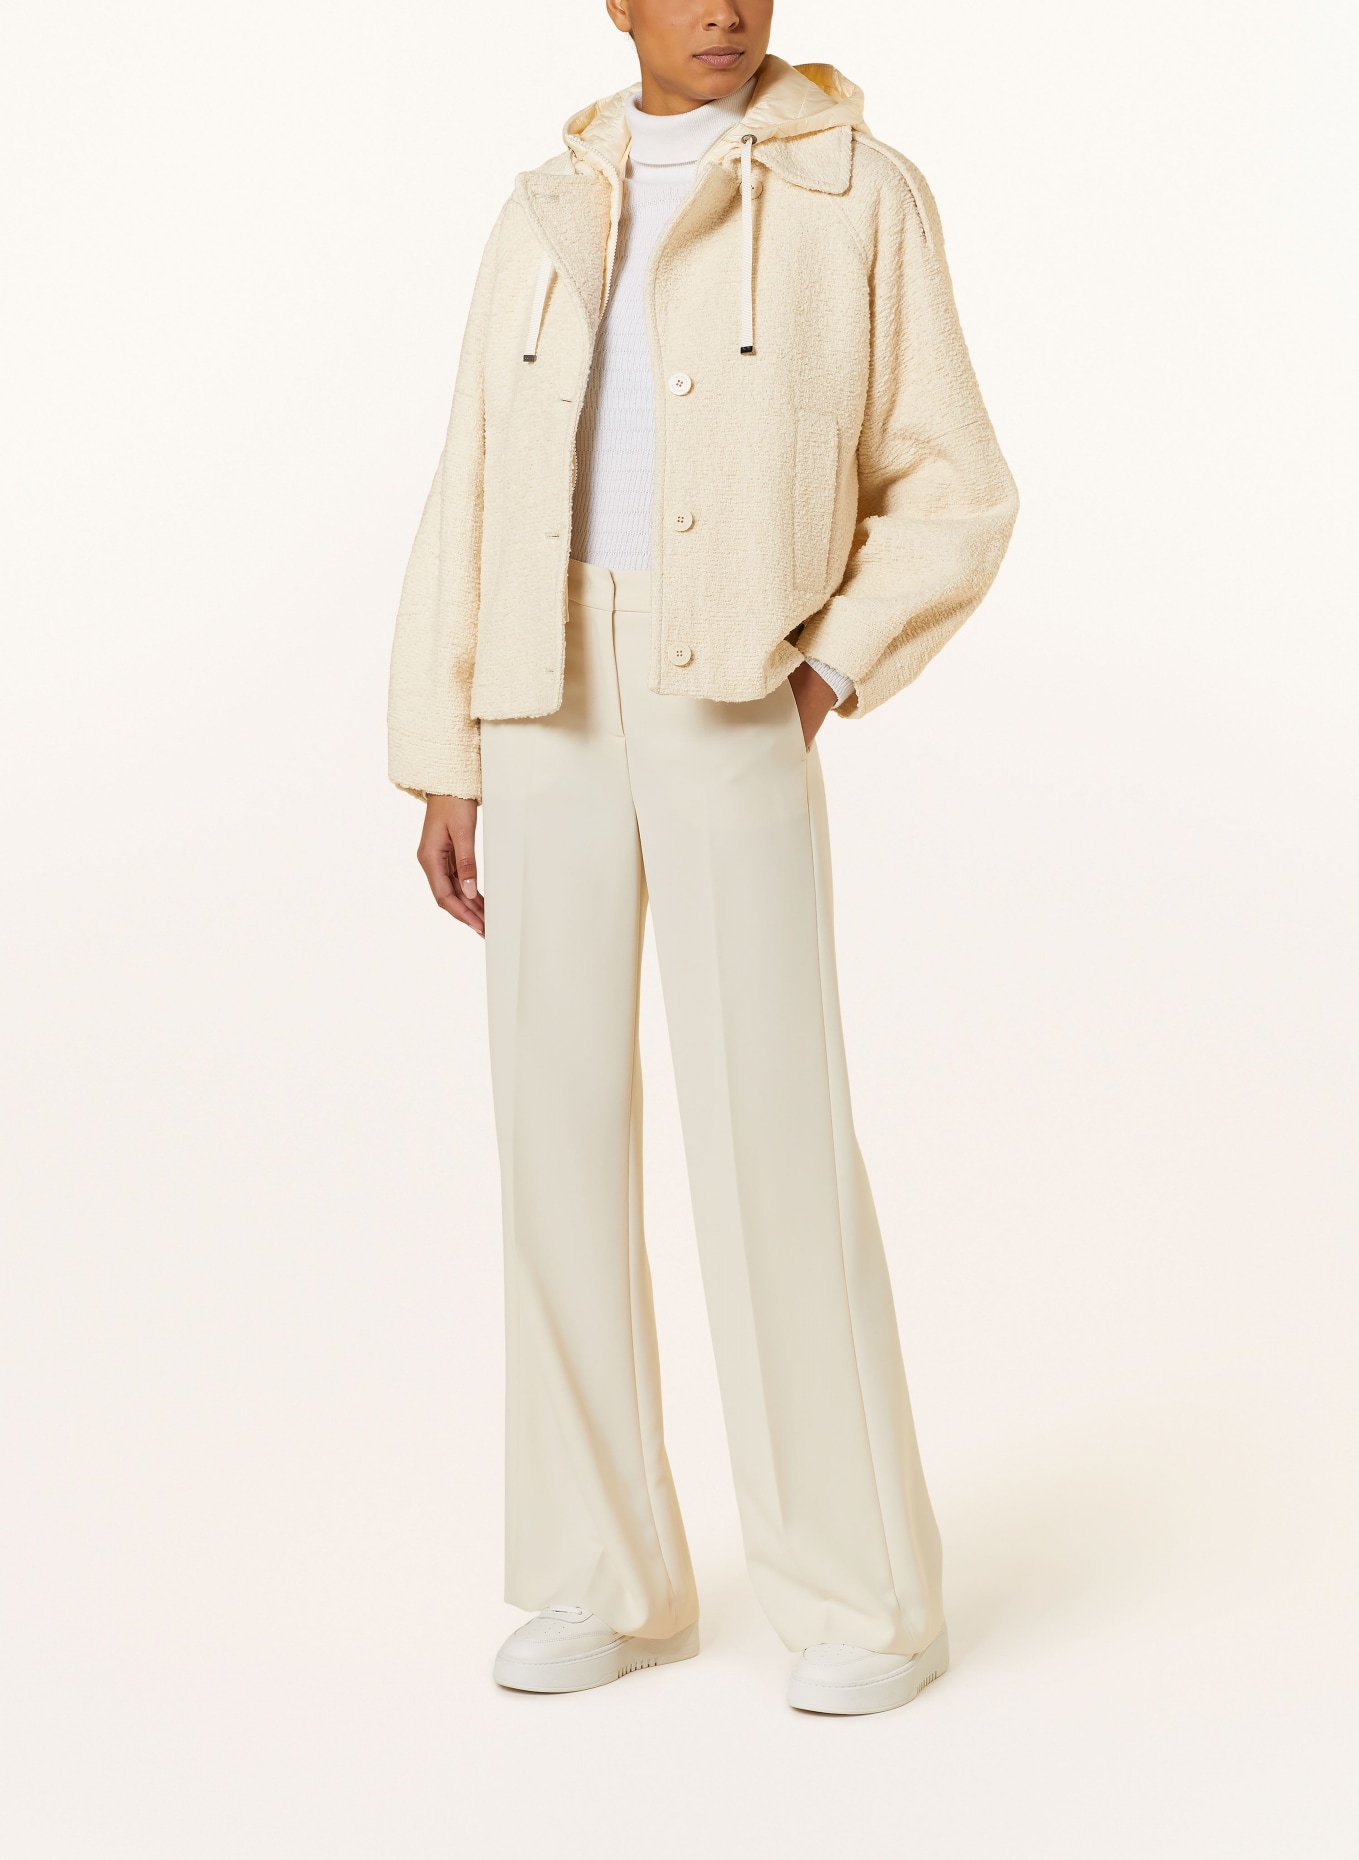 BOGNER Tweed-Jacke AMBRA mit abnehmbarer Blende, Farbe: ECRU (Bild 2)